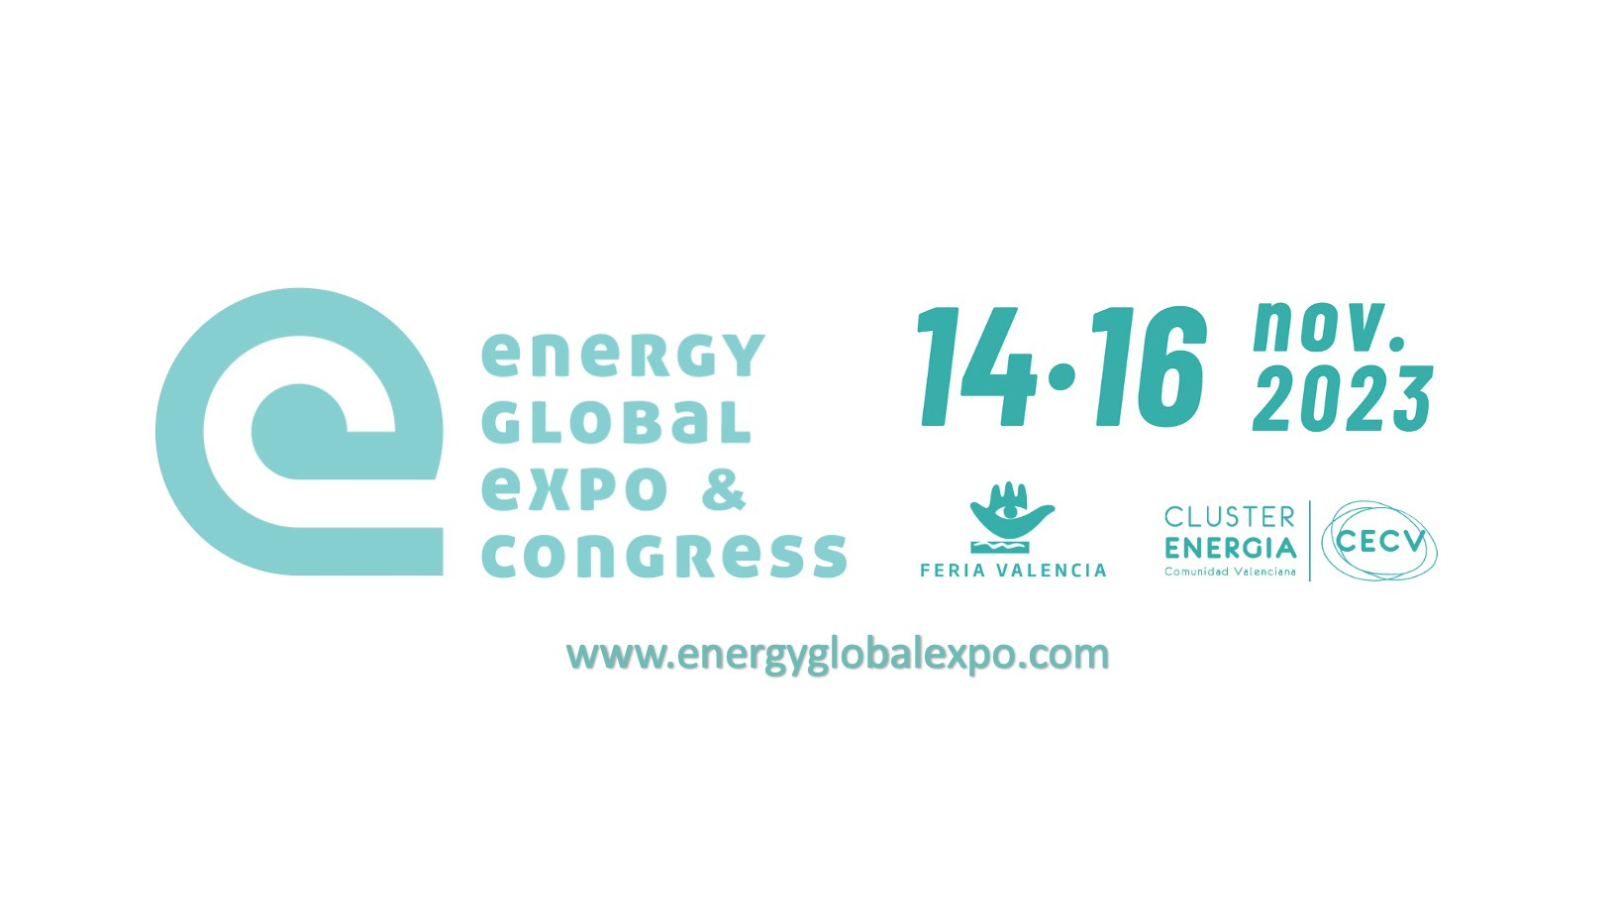 Energy Global Expo & Congress (EGEC'23) official banner